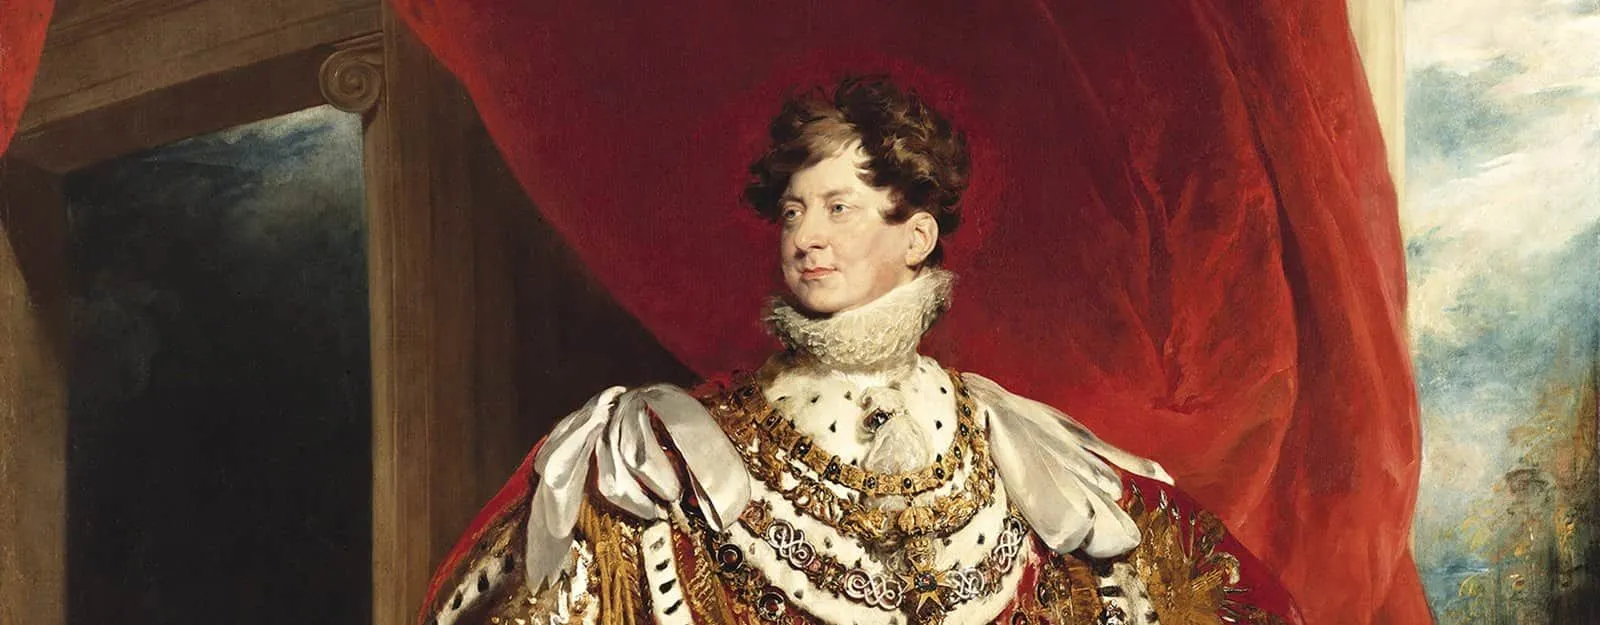 Sergisinde Kral George IV'ün resmi.